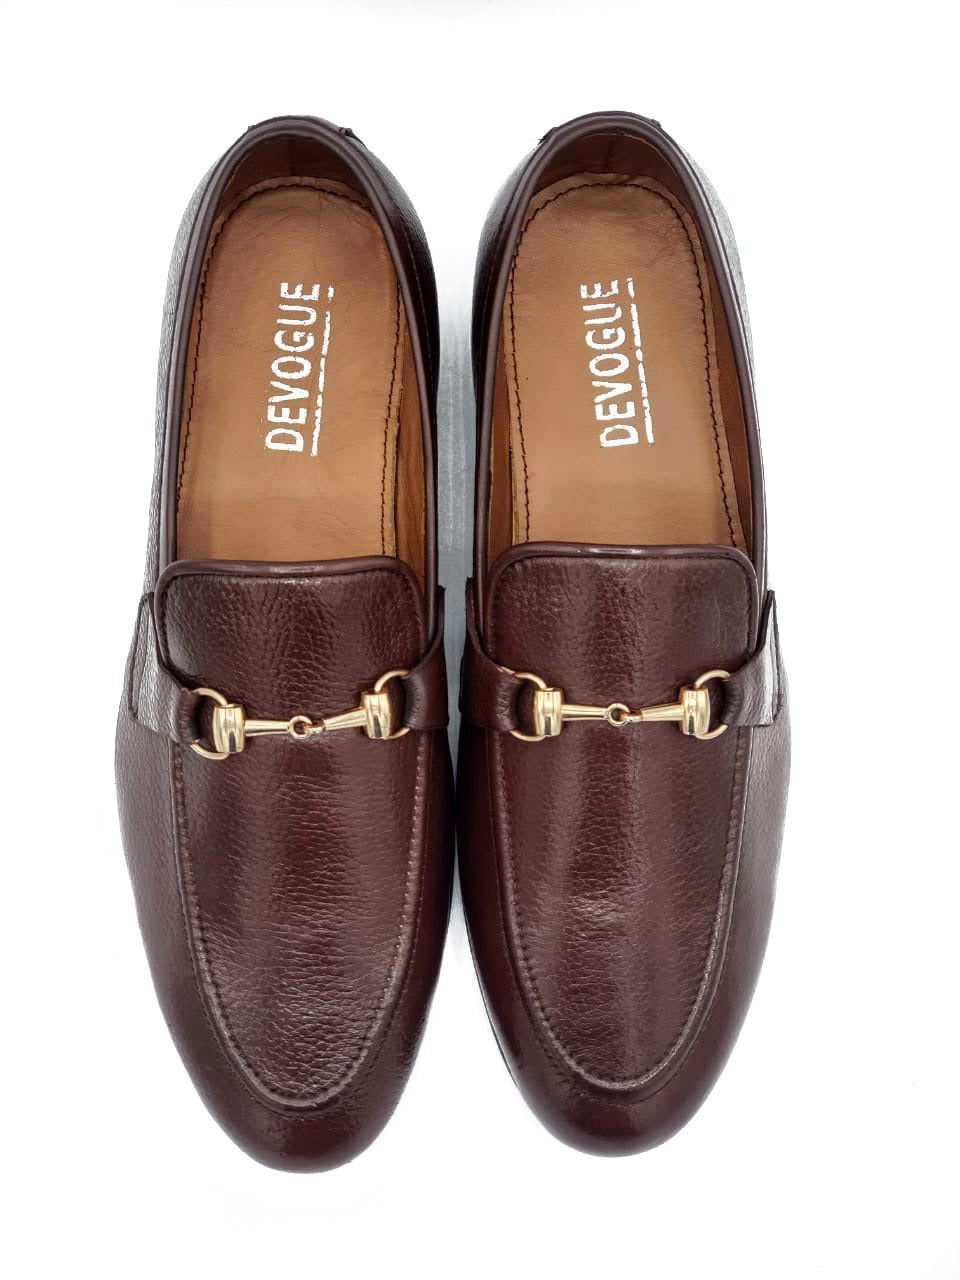 Brown Loafers Formal Shoes For Men Model Number 2017 – Luxury D'Allure